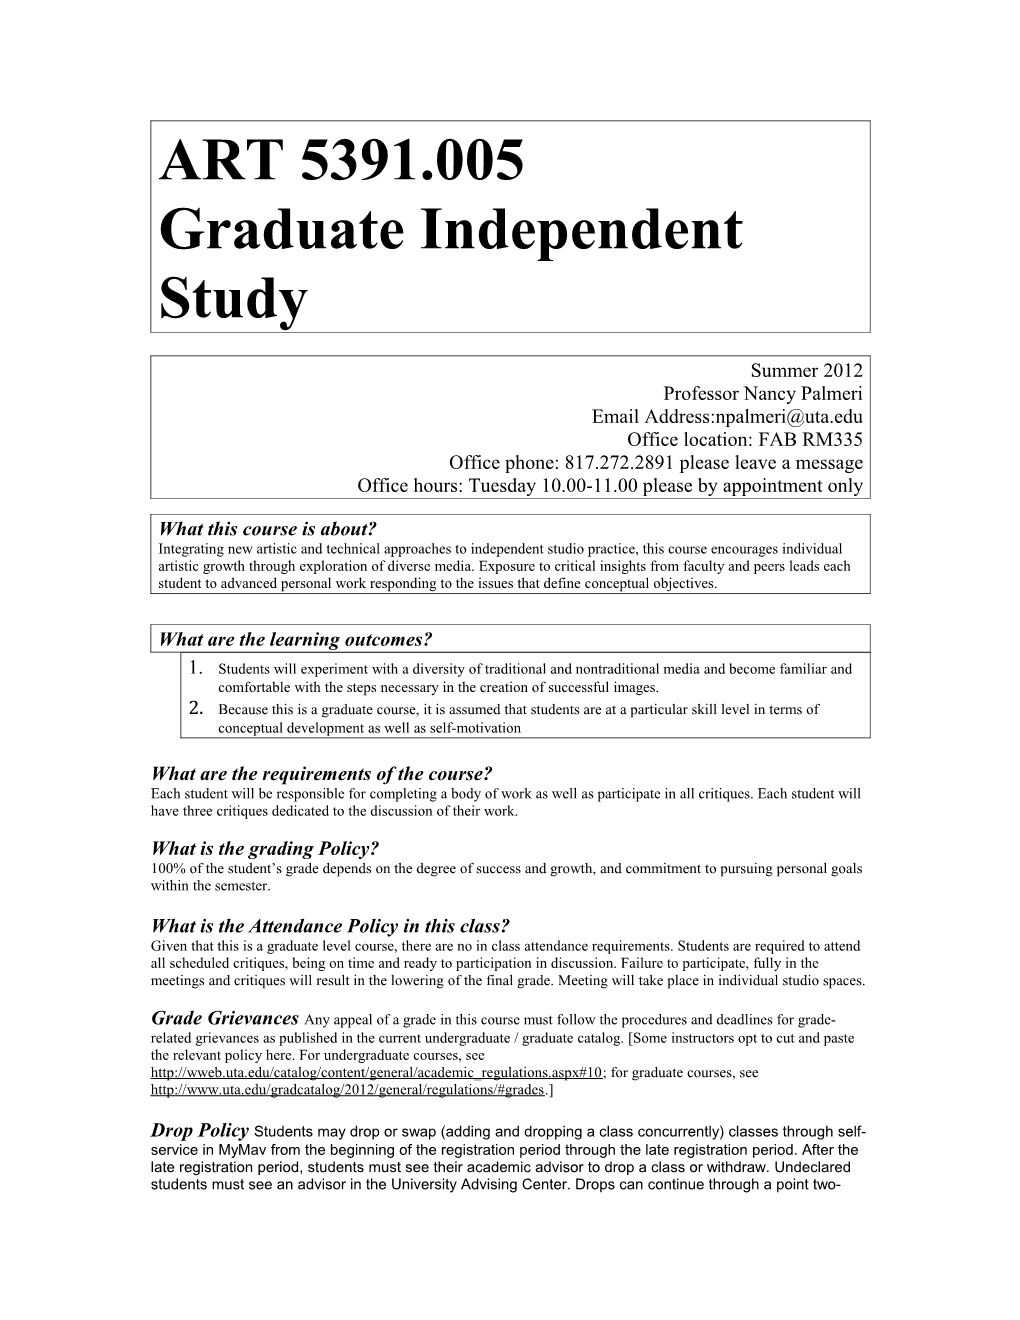 Graduate Independent Study